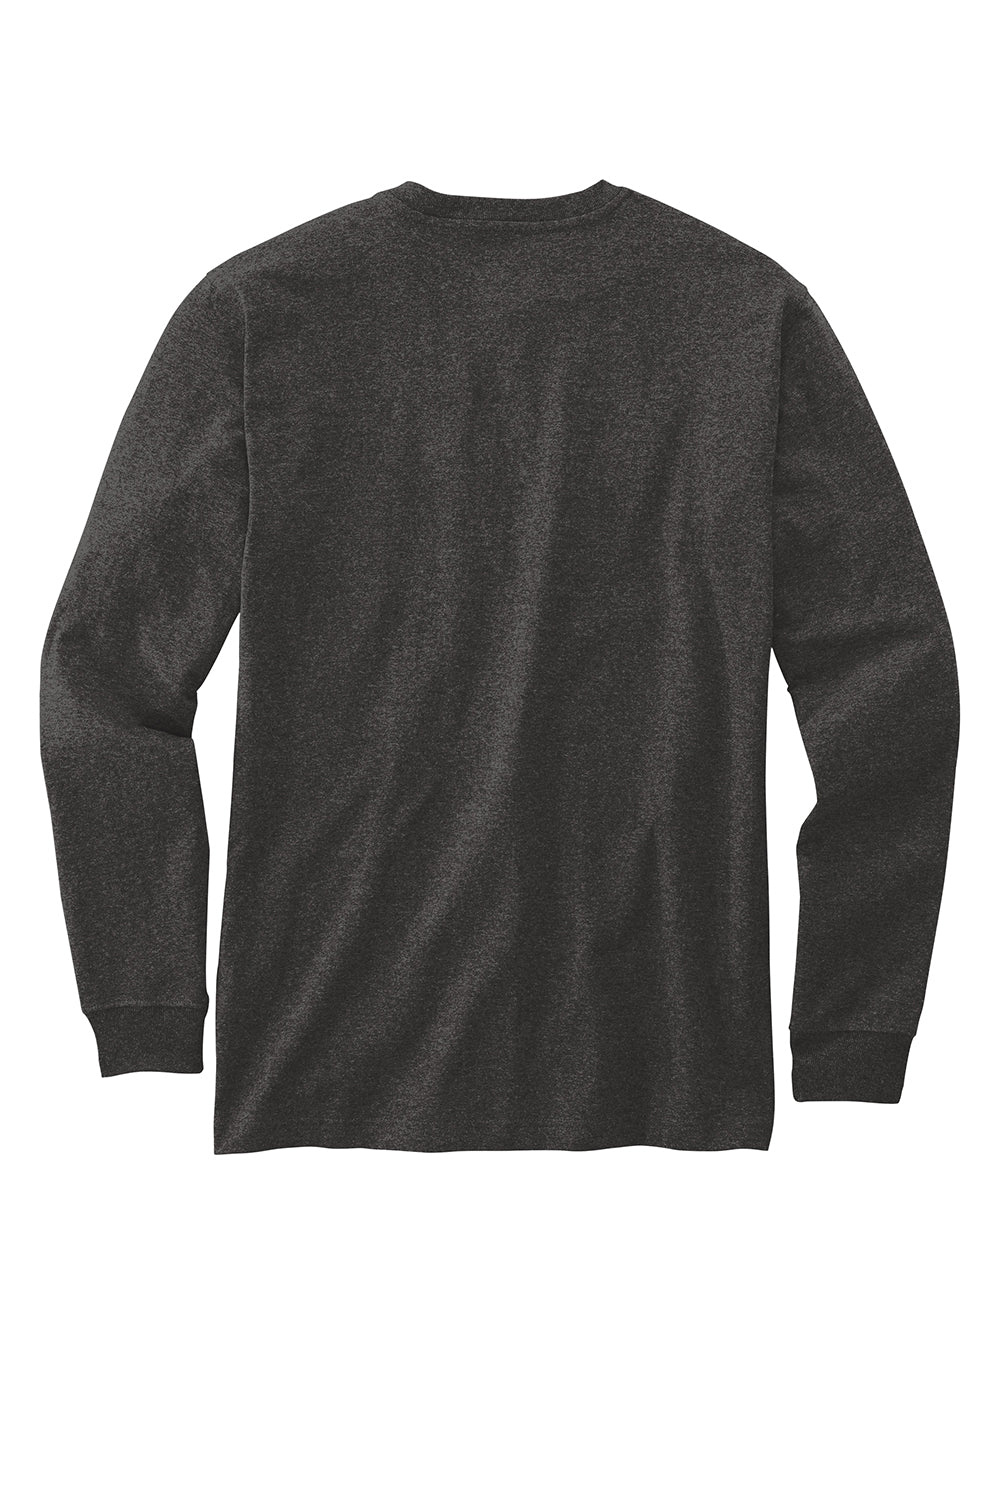 Carhartt CTK128 Mens Long Sleeve Henley T-Shirt w/ Pocket Heather Carbon Grey Flat Back